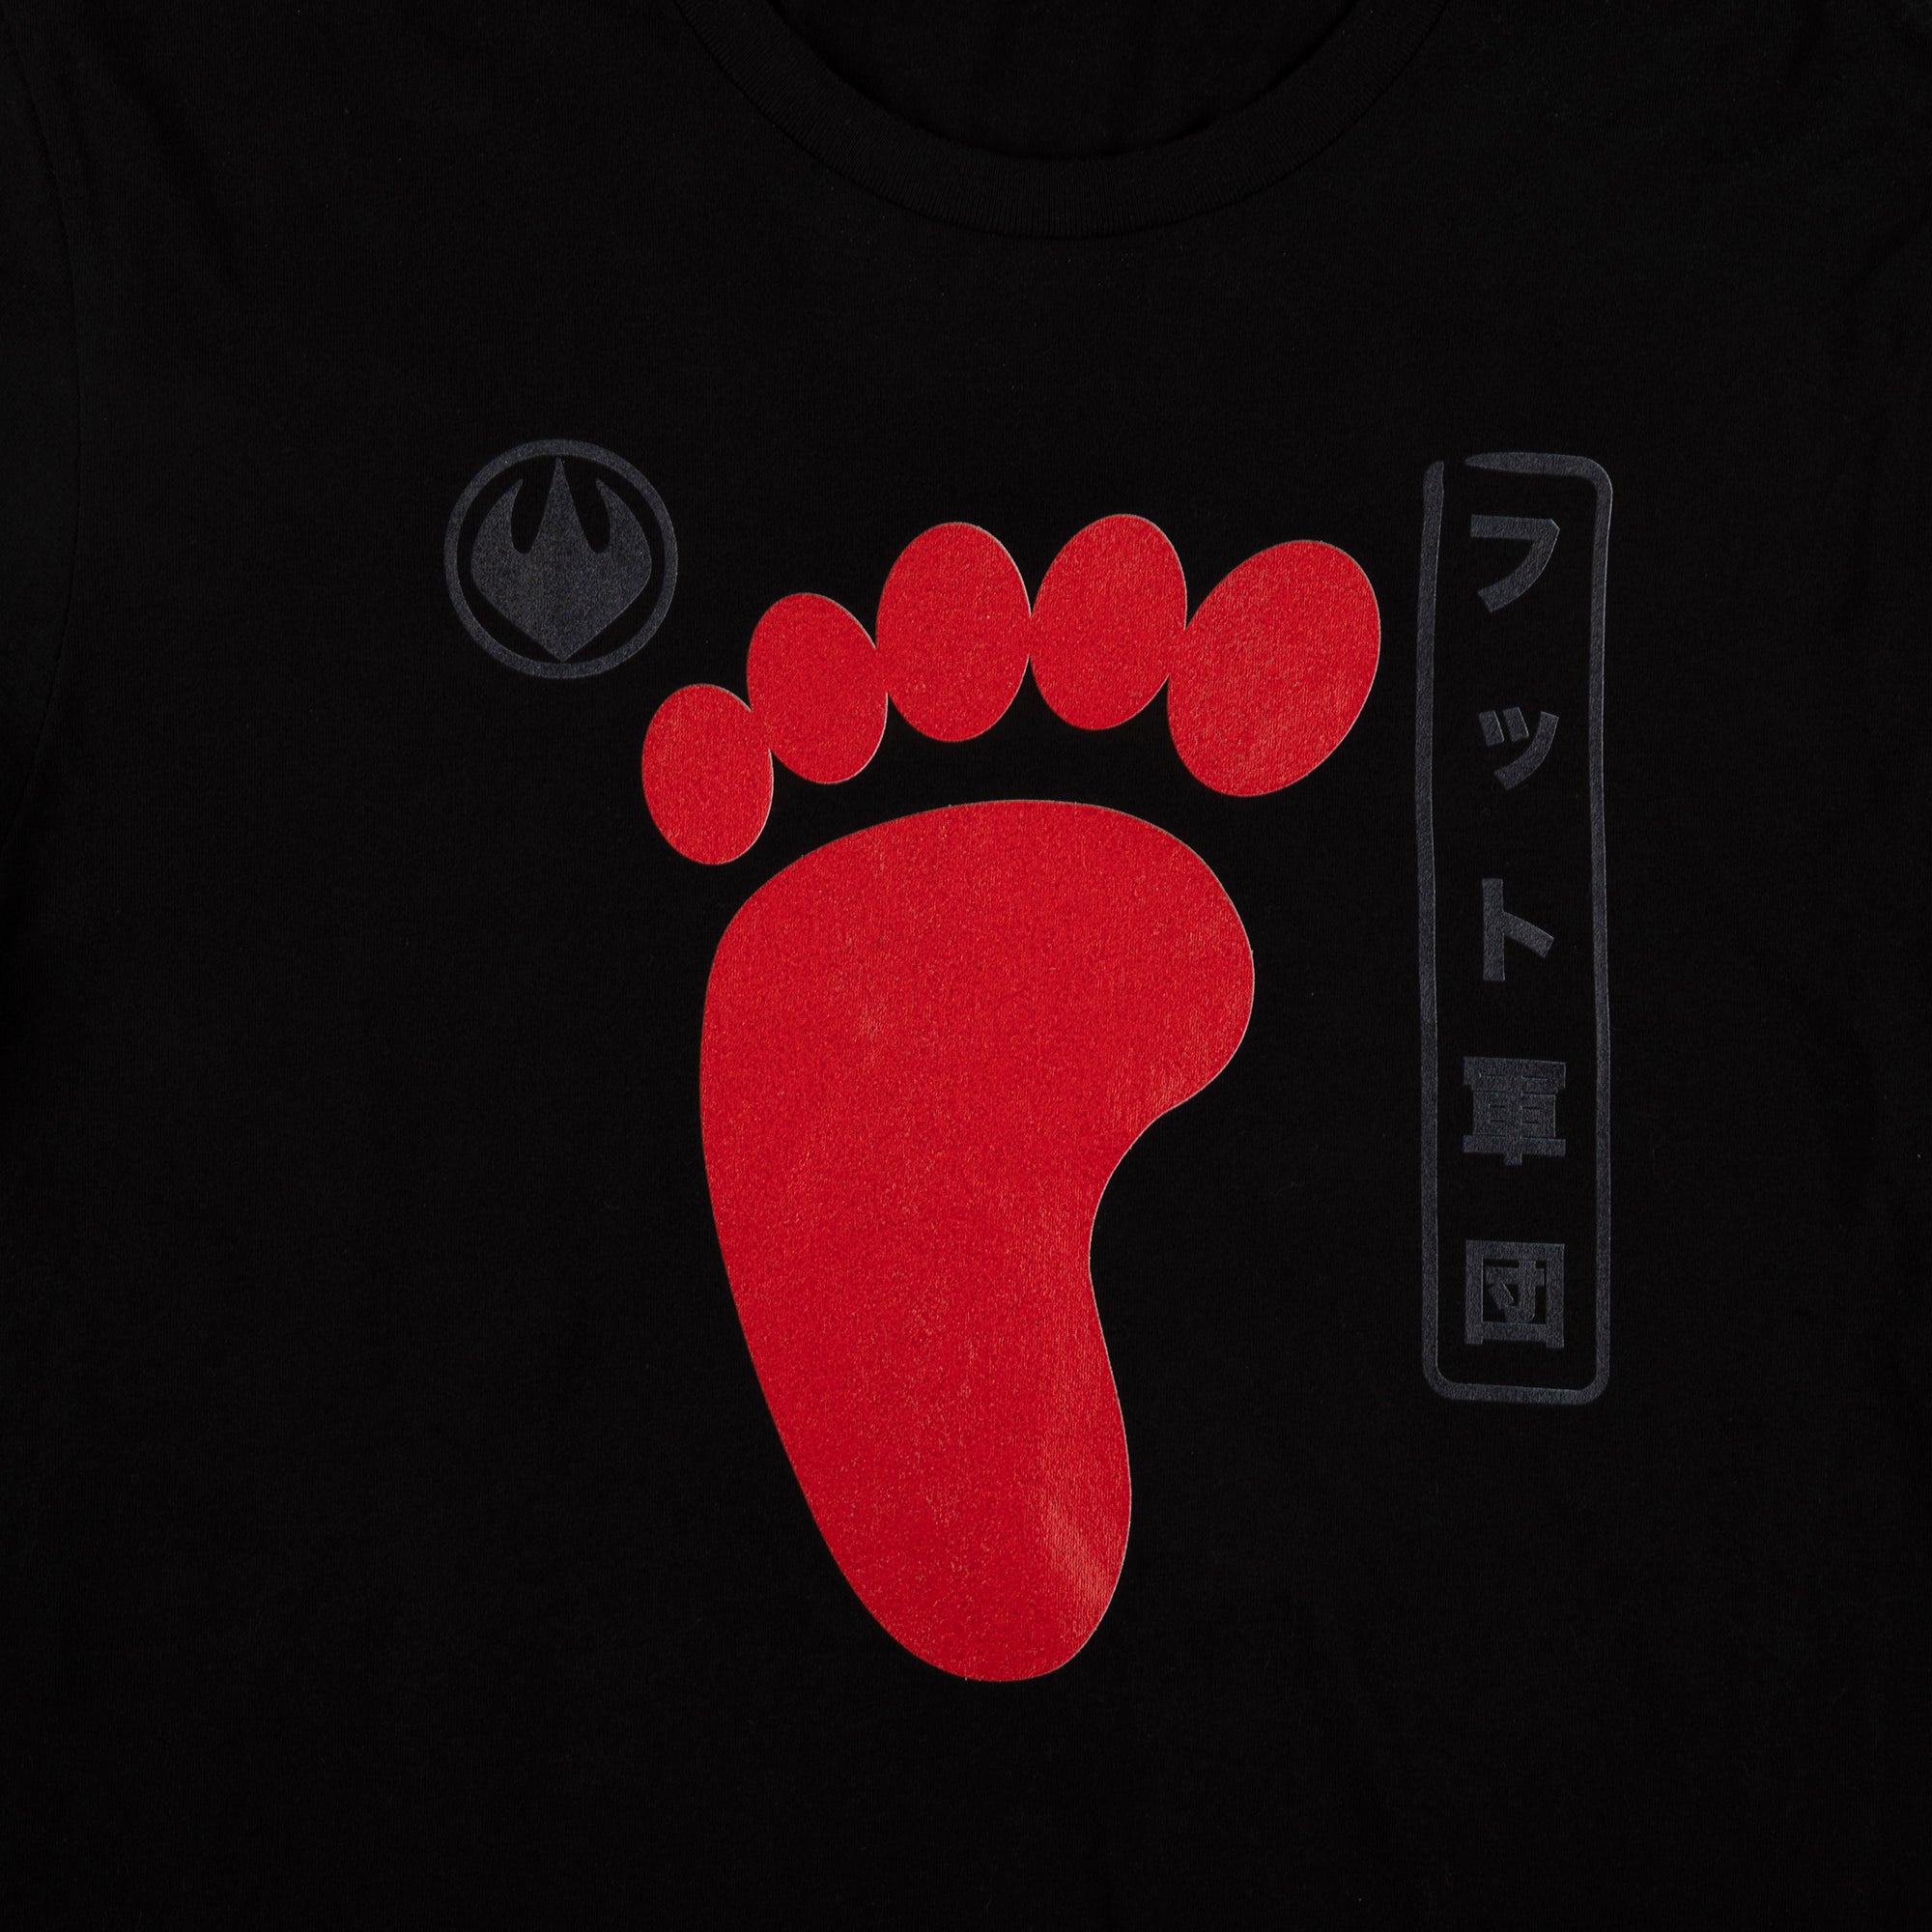 Foot Clan Symbol Black Long Sleeve